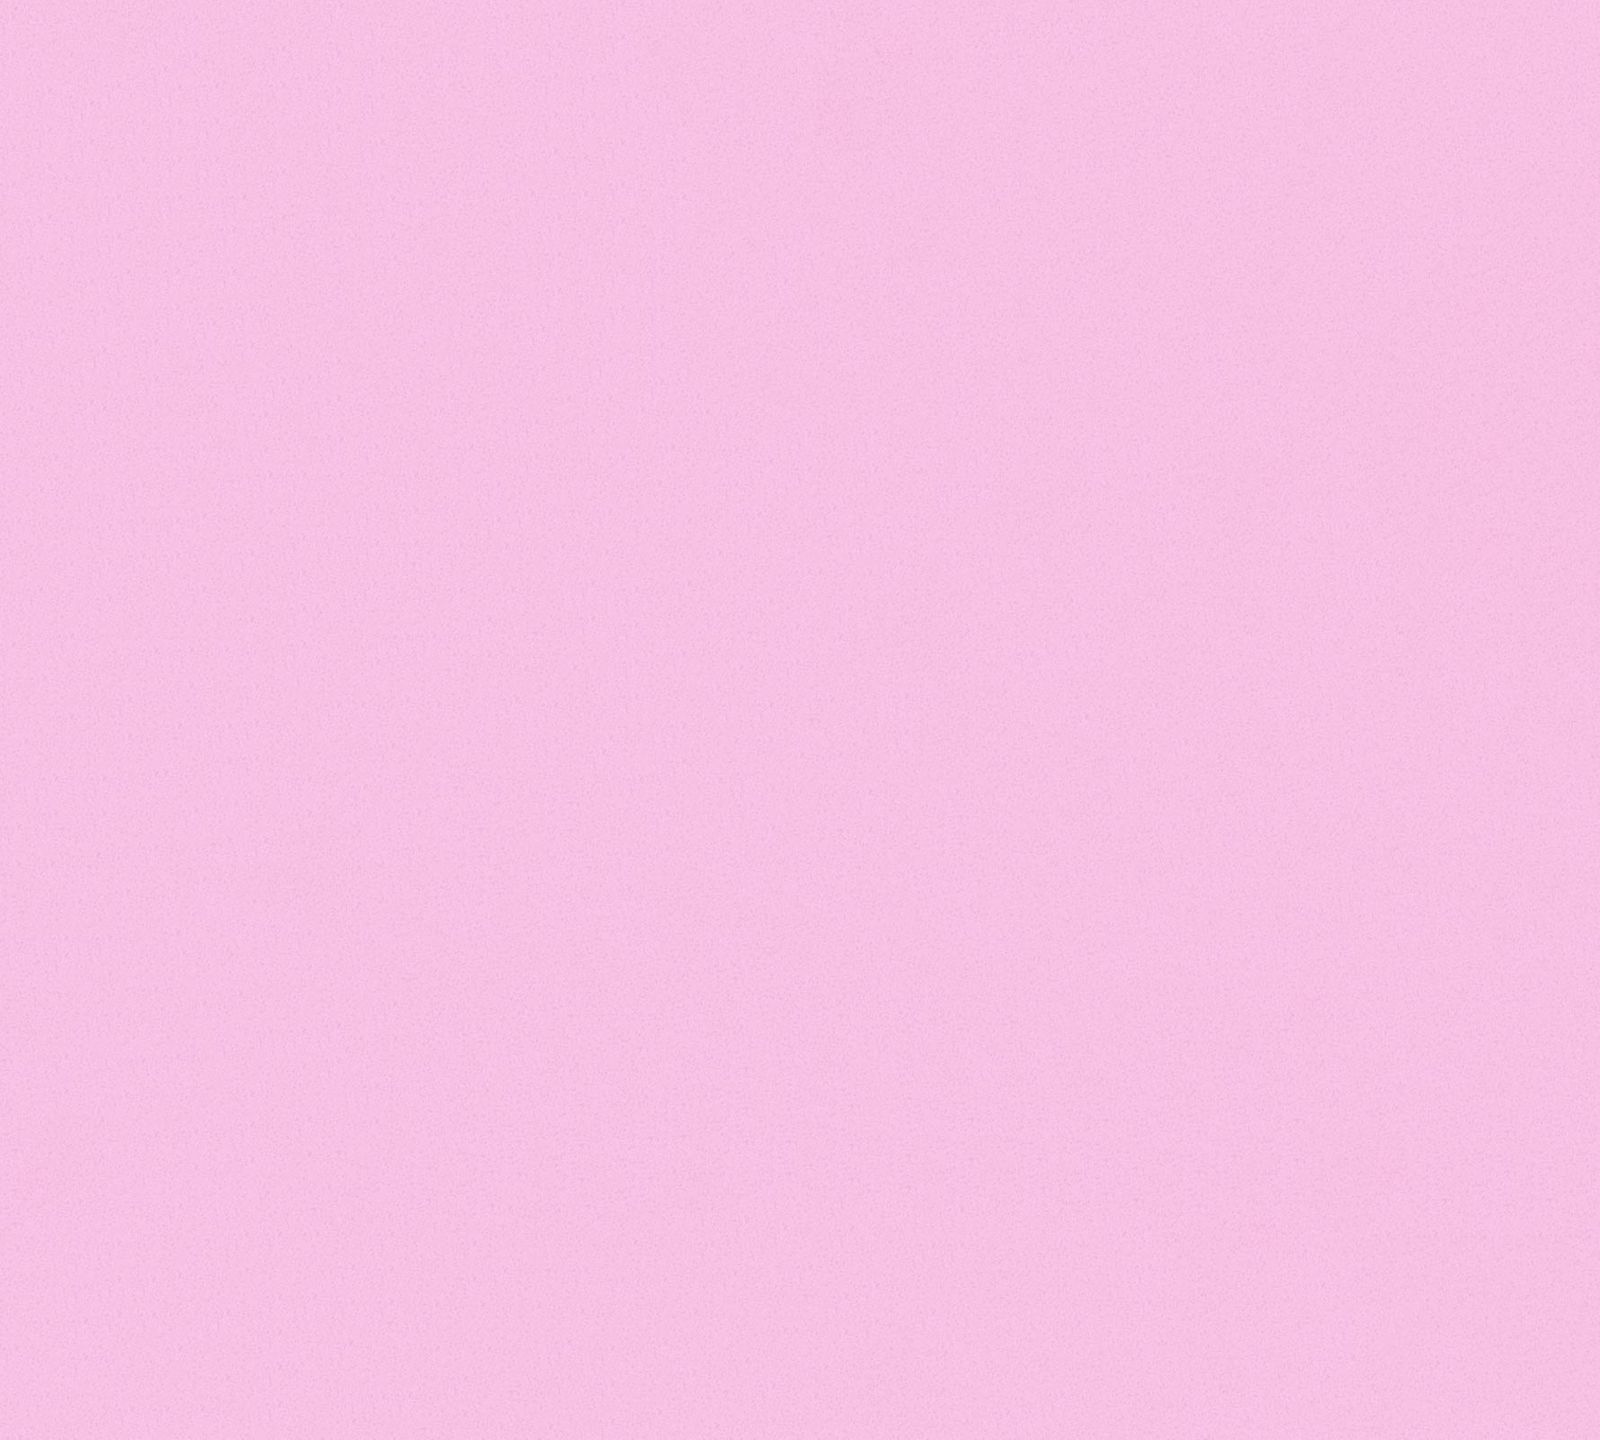 Plain Pink Wallpaper Free Plain Pink Background